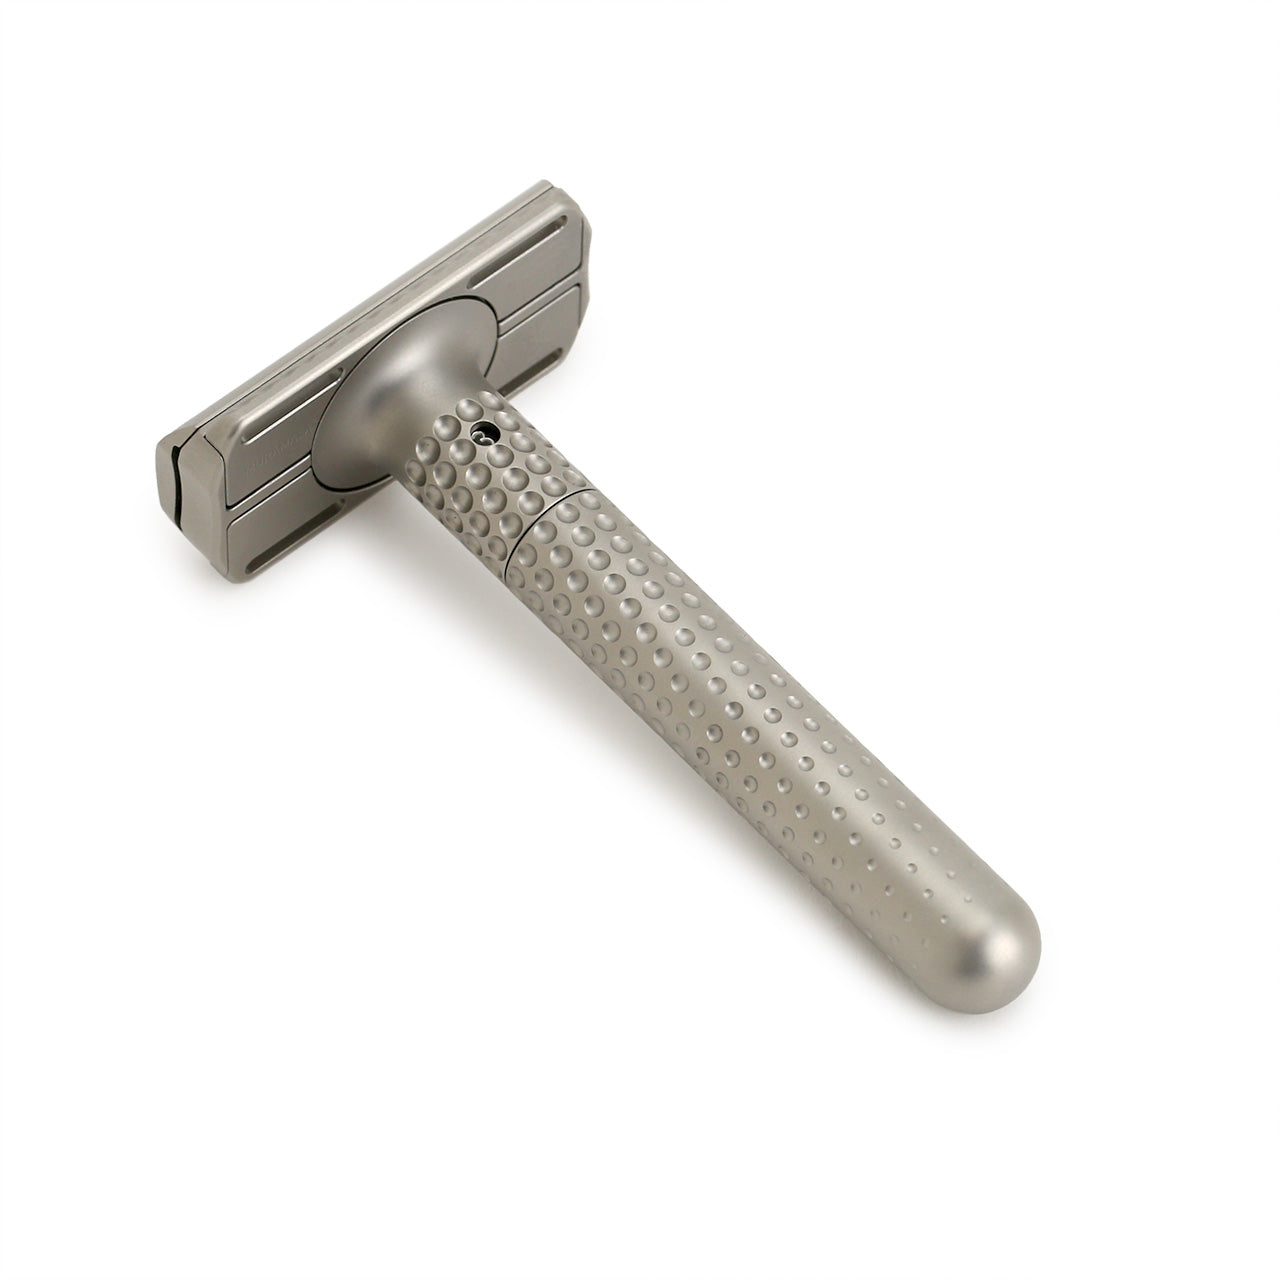 Tatara Muramasa Adjustable razor in its stand with tool